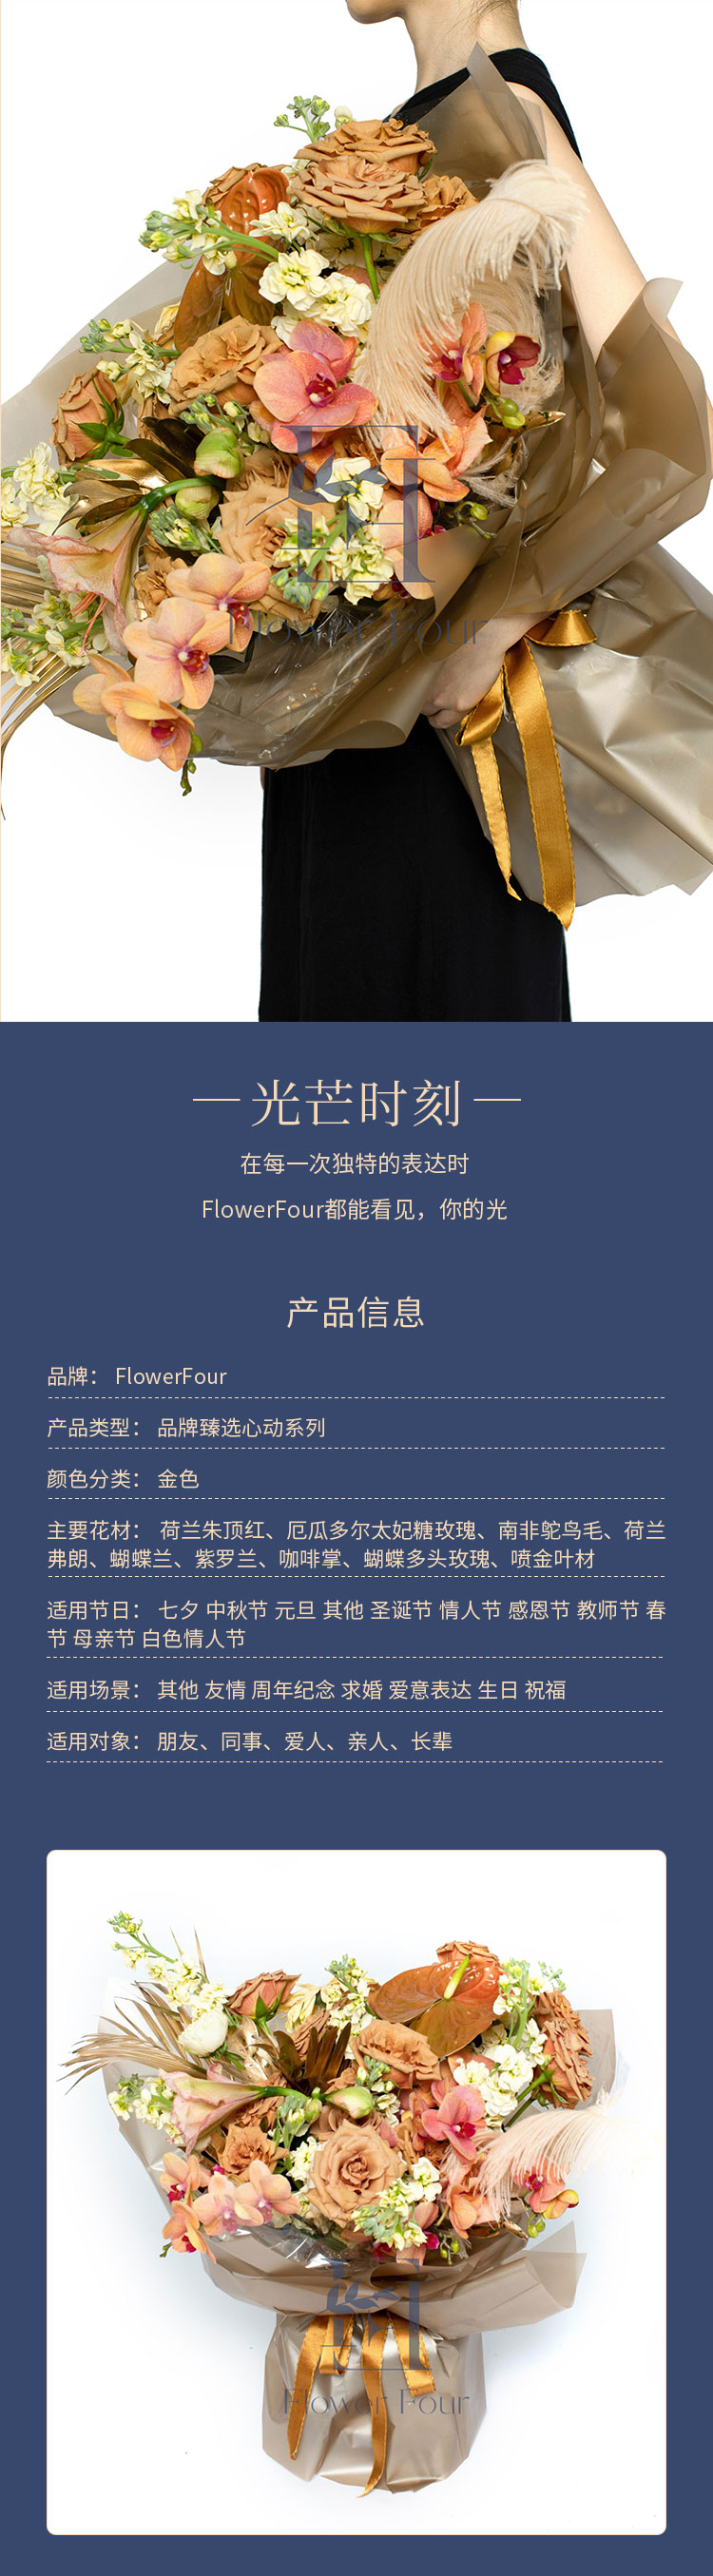 FlowerFour/FlowerFour 进口花材鲜花花束 光芒时刻 生日纪念日节日花束【北京地区专享】